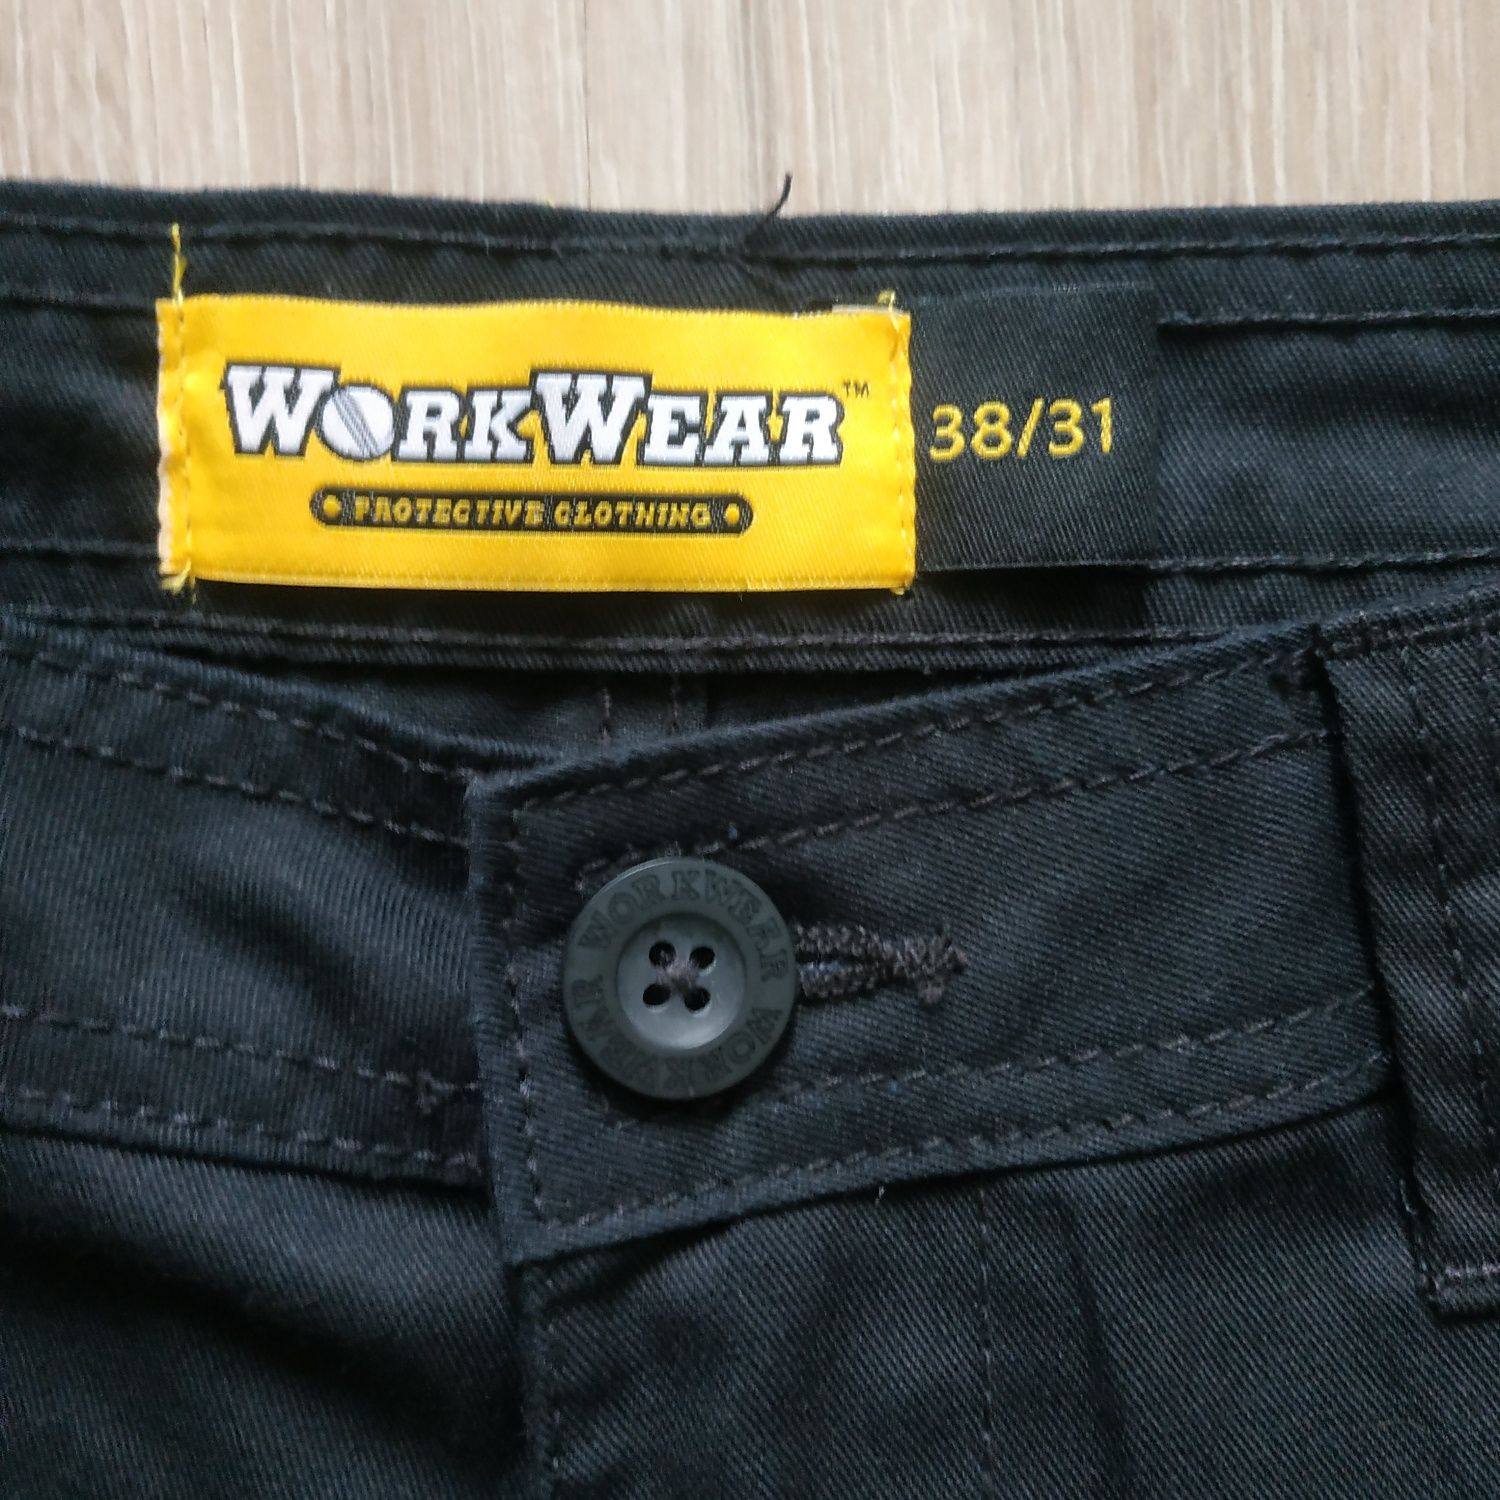 Work wear штаны рабочие с карманами для наколенников размер 38/31, нов